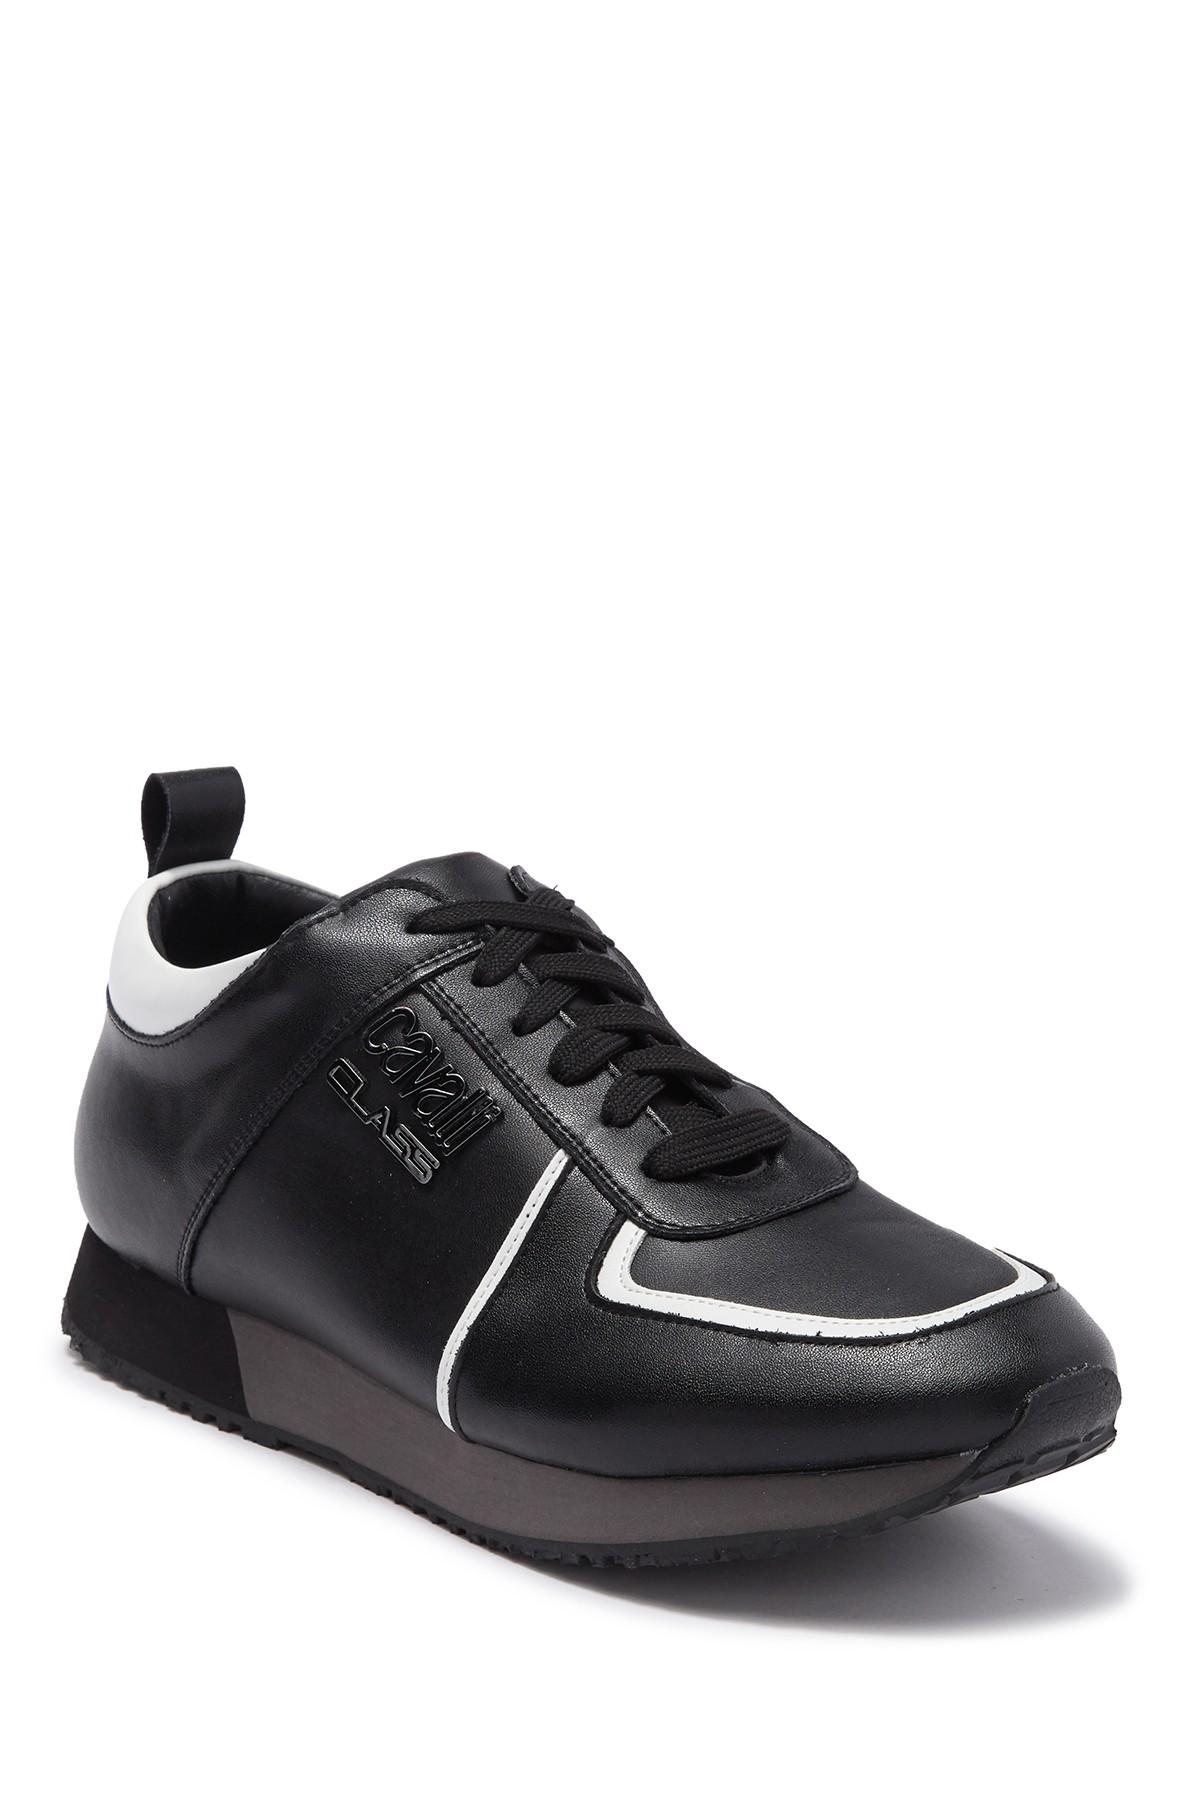 Roberto Cavalli 'cavalli' Lace-up Retro Sneaker in Black for Men - Lyst